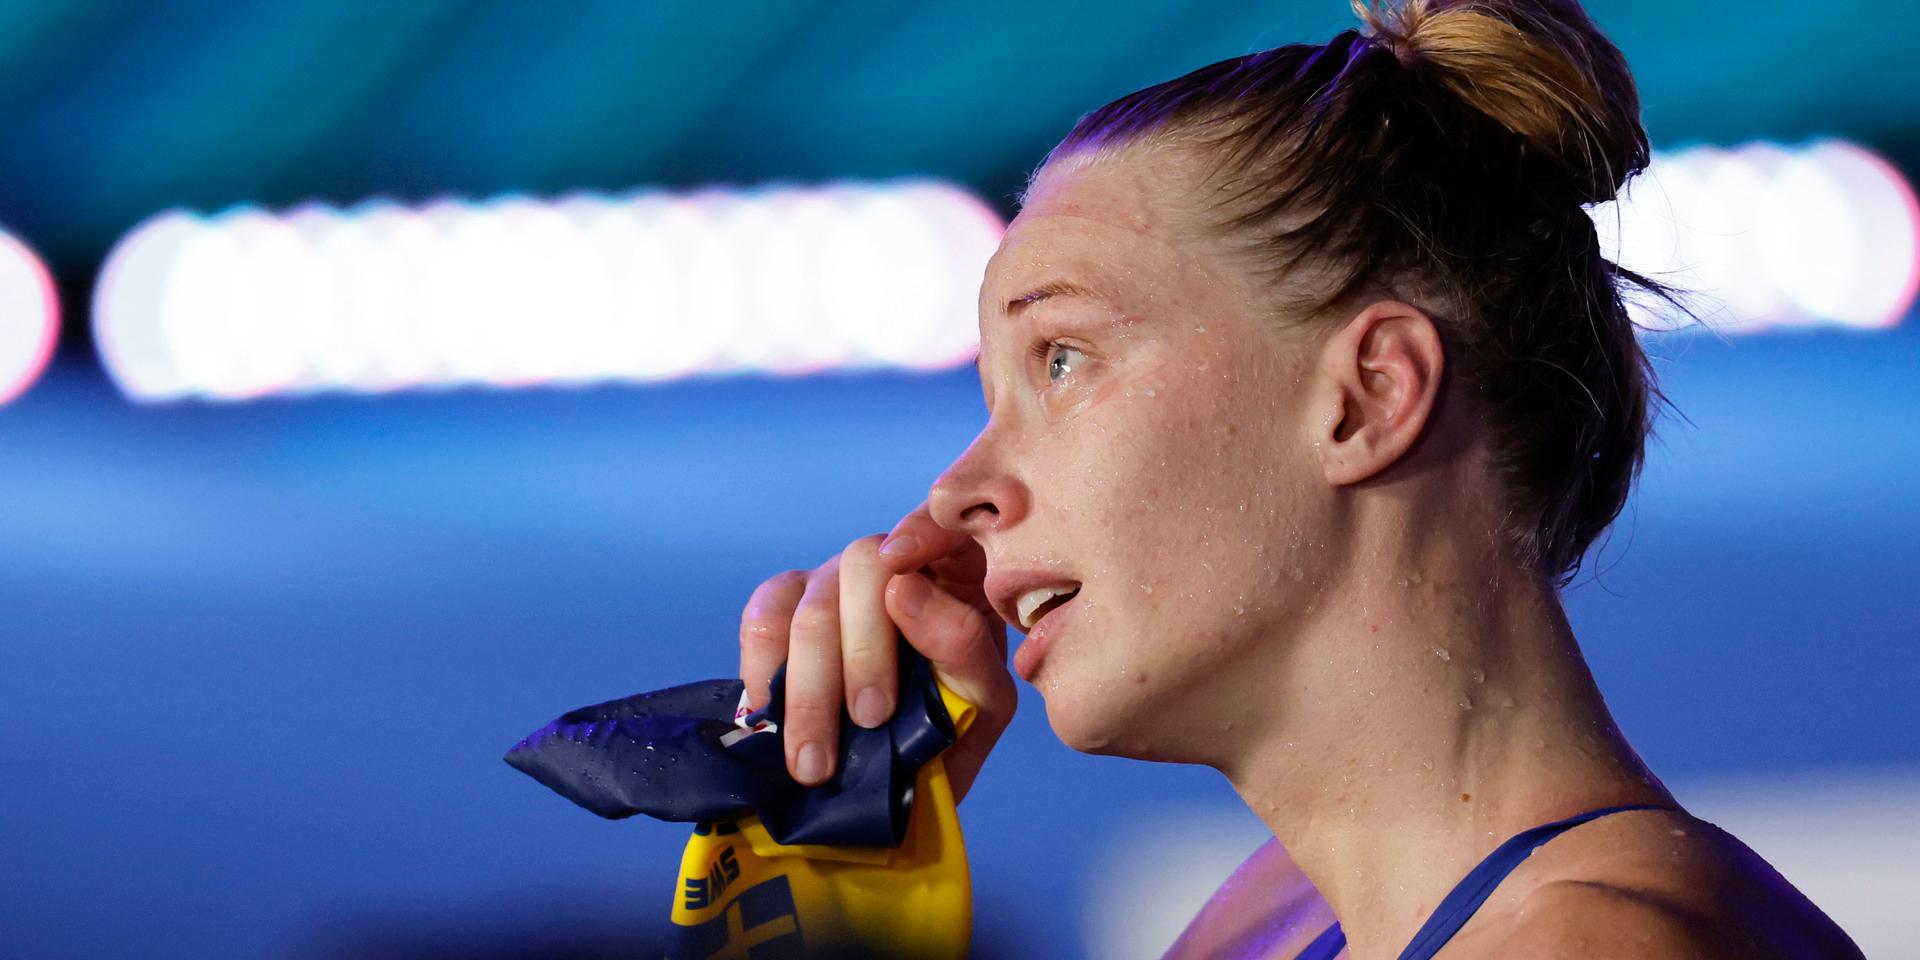 Louise Hansson var i tårar efter medaljmissen.